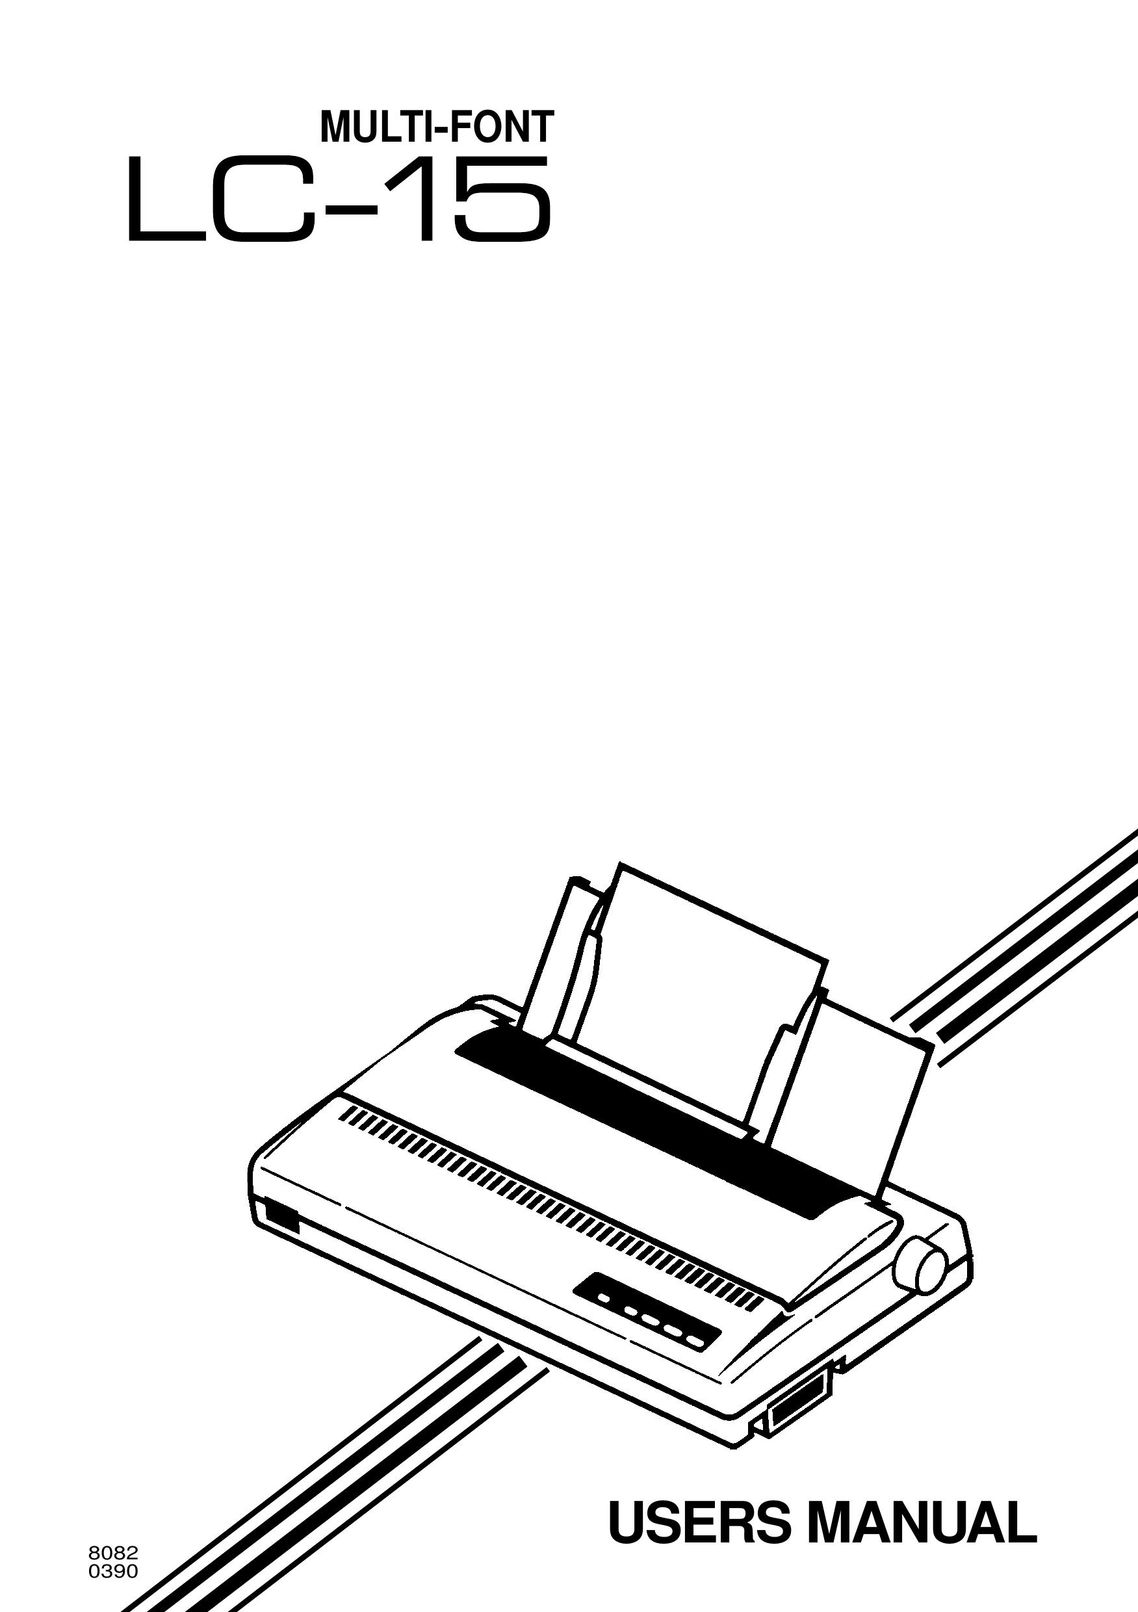 Star Micronics LC-15 Printer User Manual